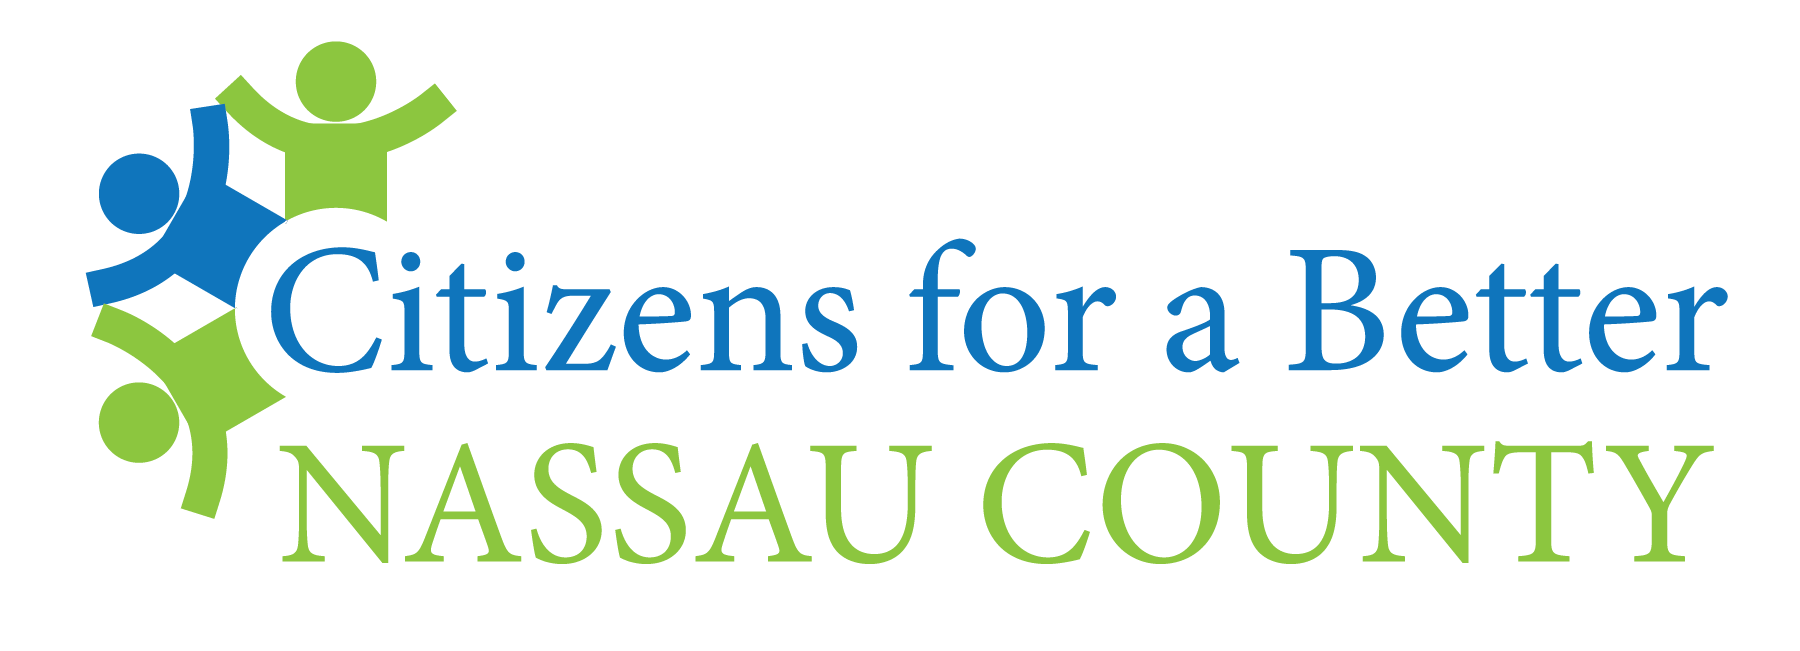 Citizens for a Better Nassau County